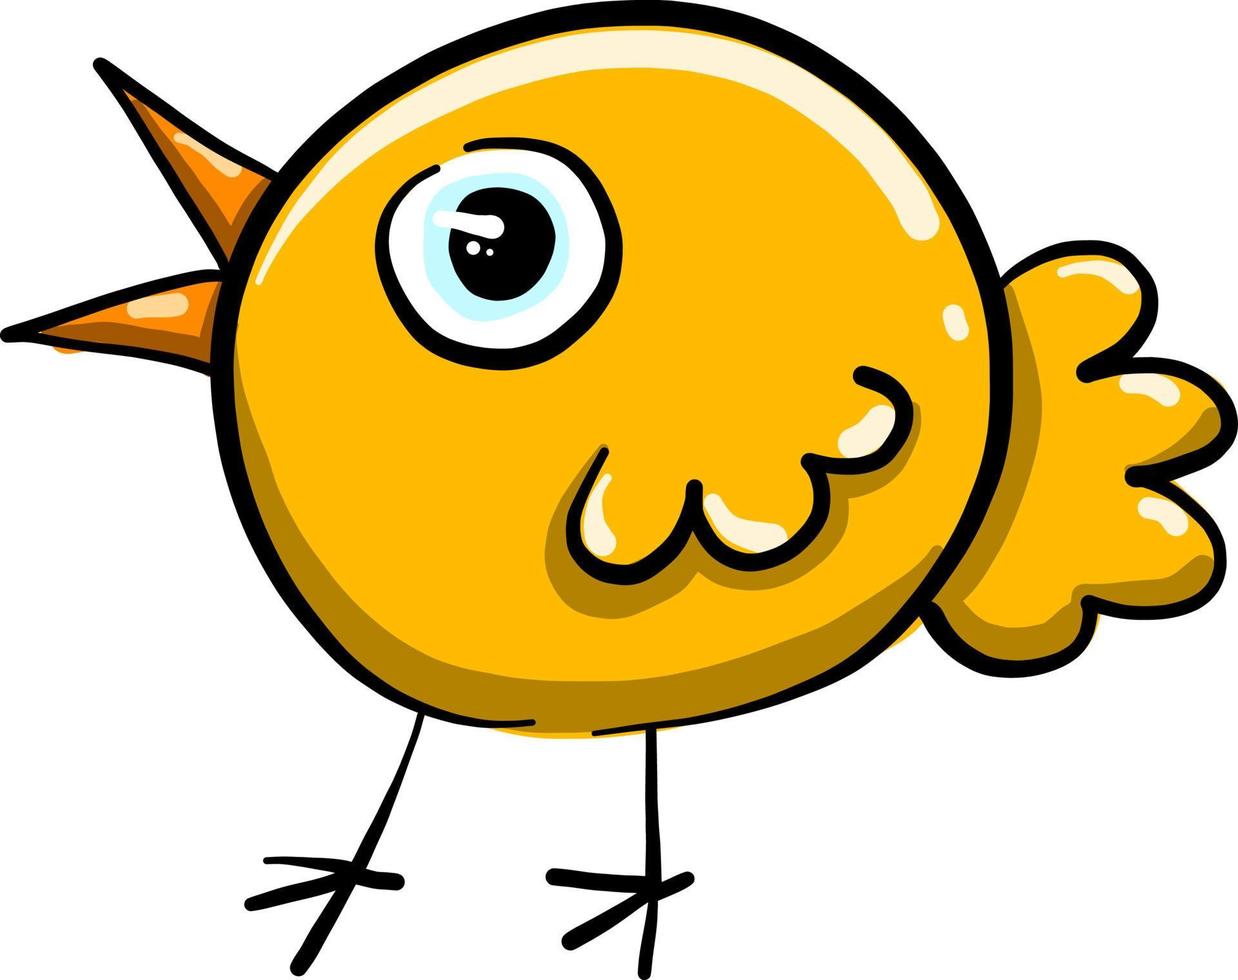 Yellow bird, illustration, vector on white background